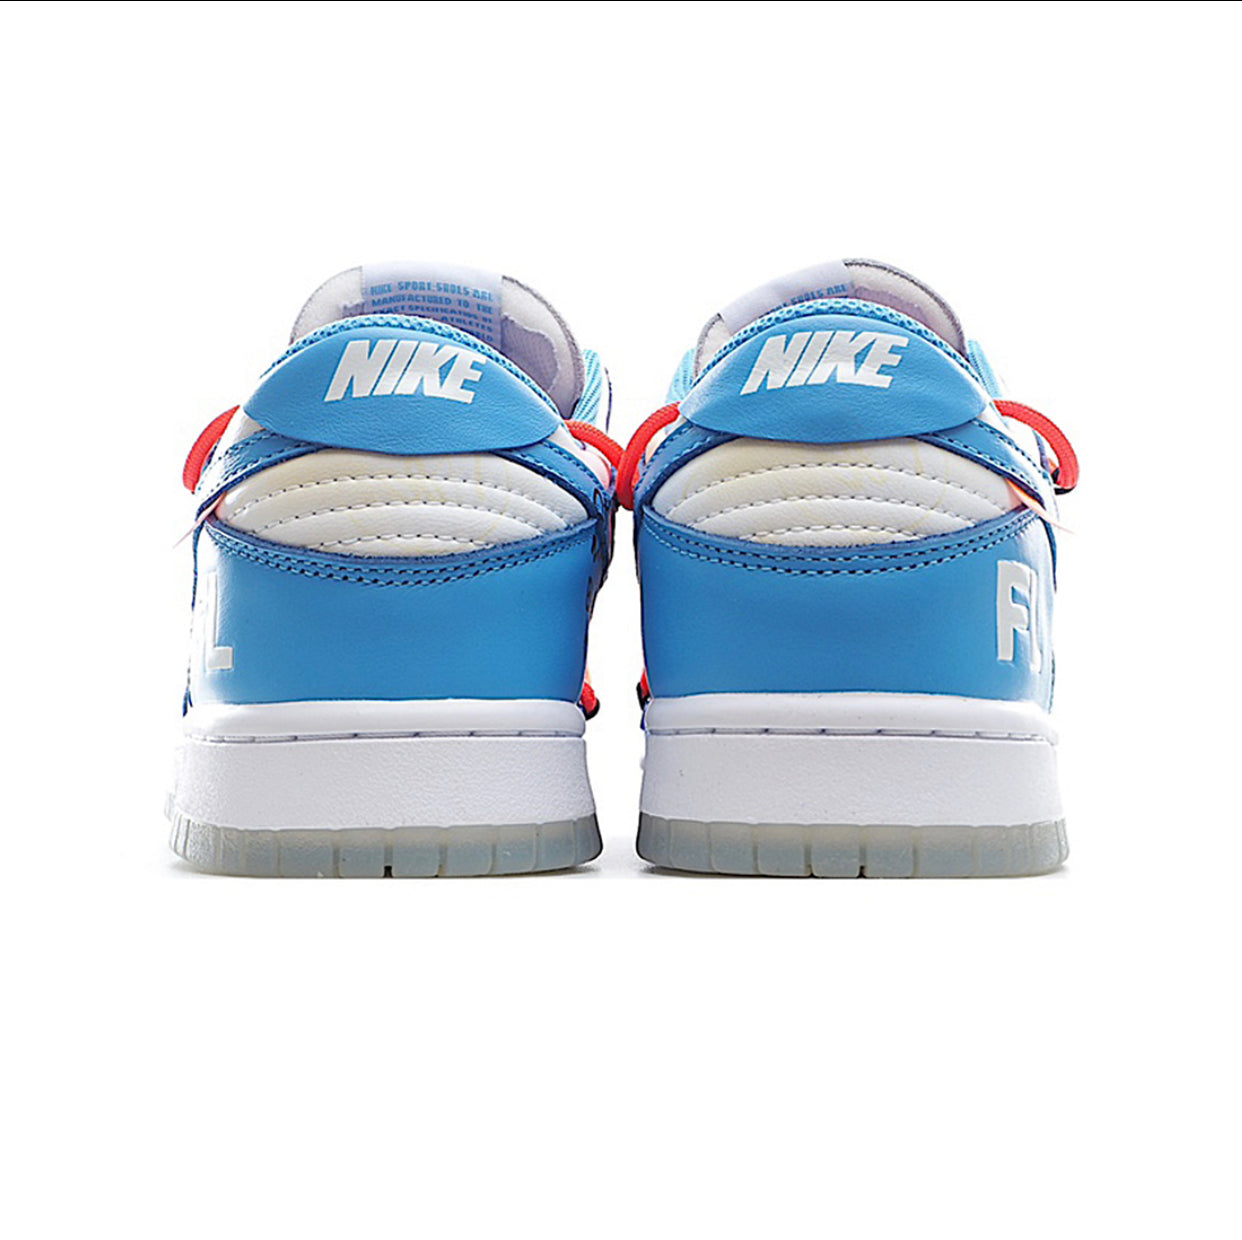 Off-White x Futura x Nike Dunk Low Bright Blue